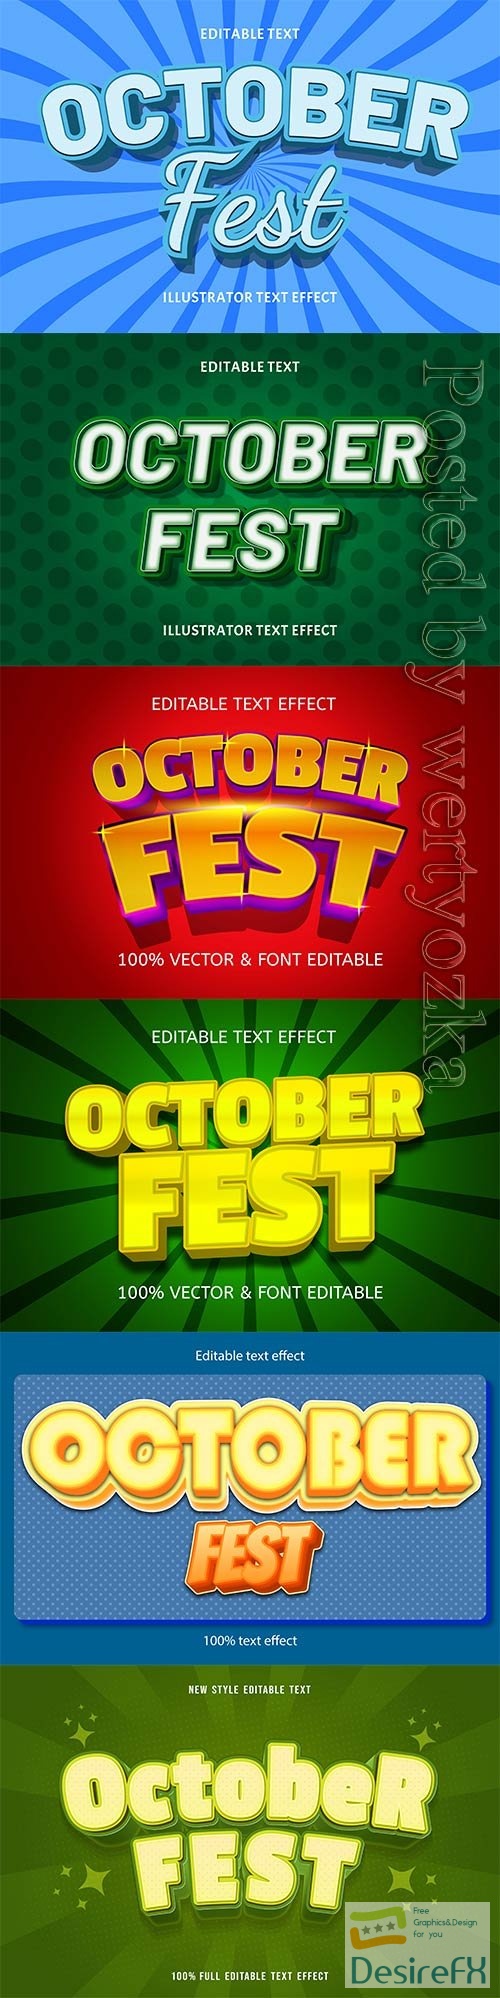 October fest editable text effect vol 6